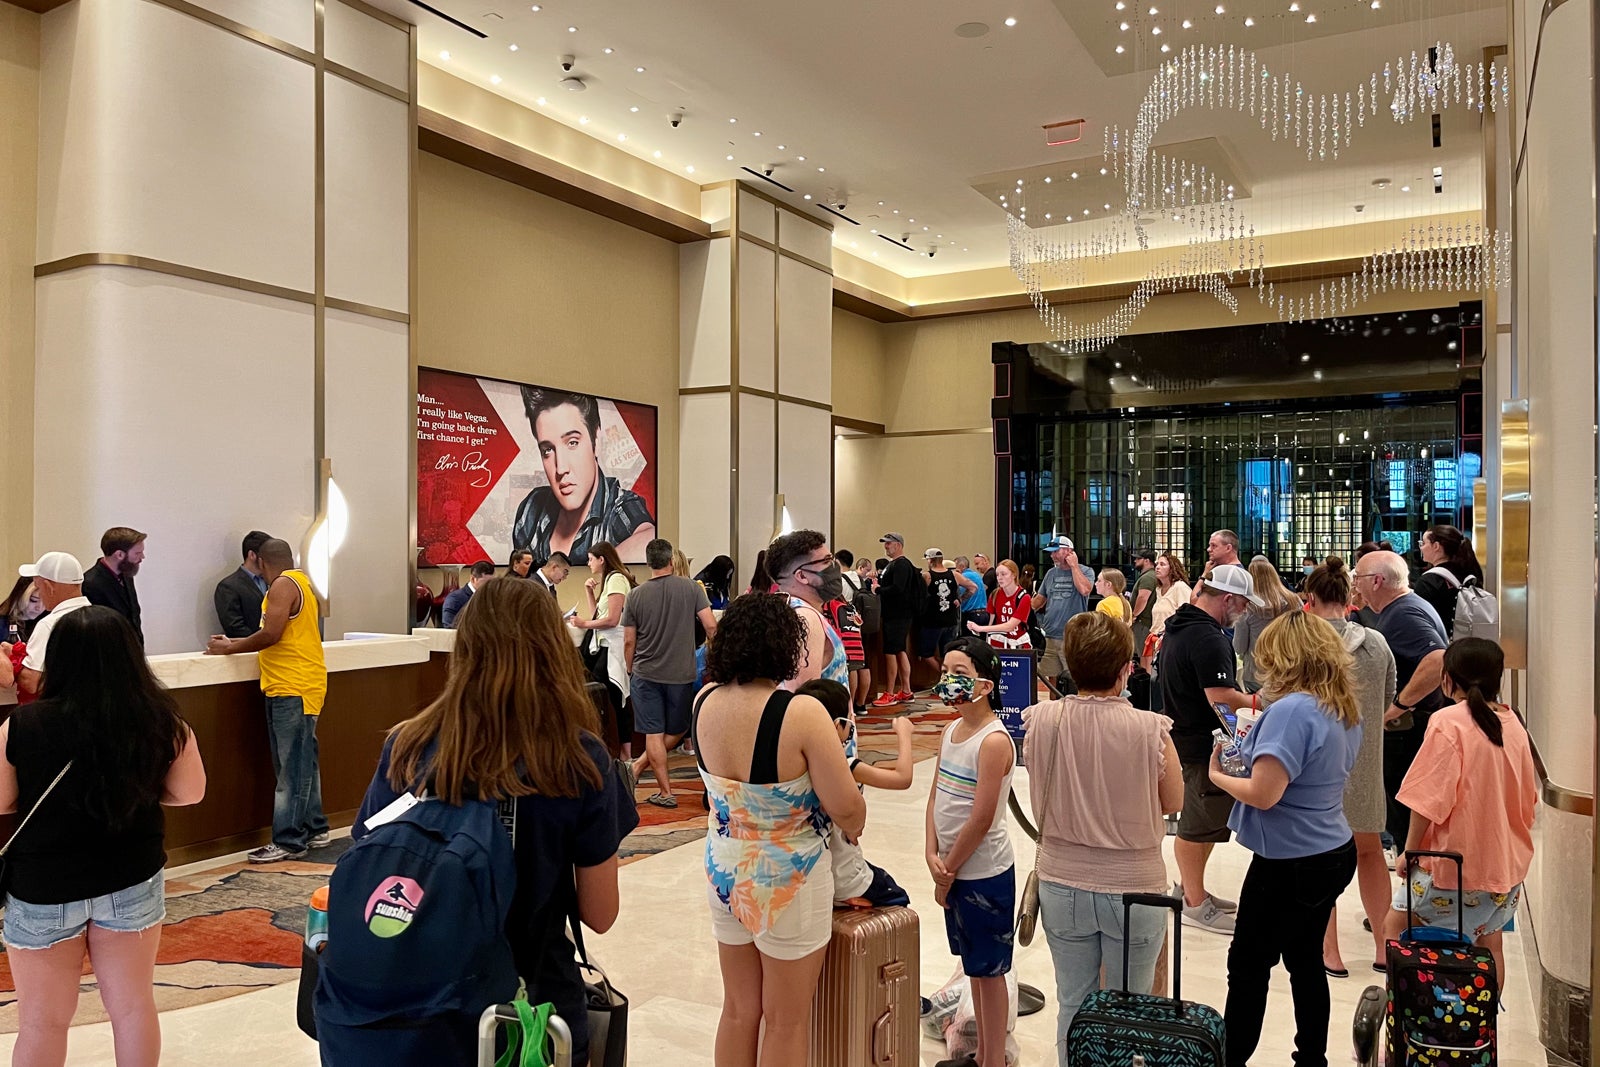 Hilton to open three hotel brands at Resorts World Las Vegas – IAG